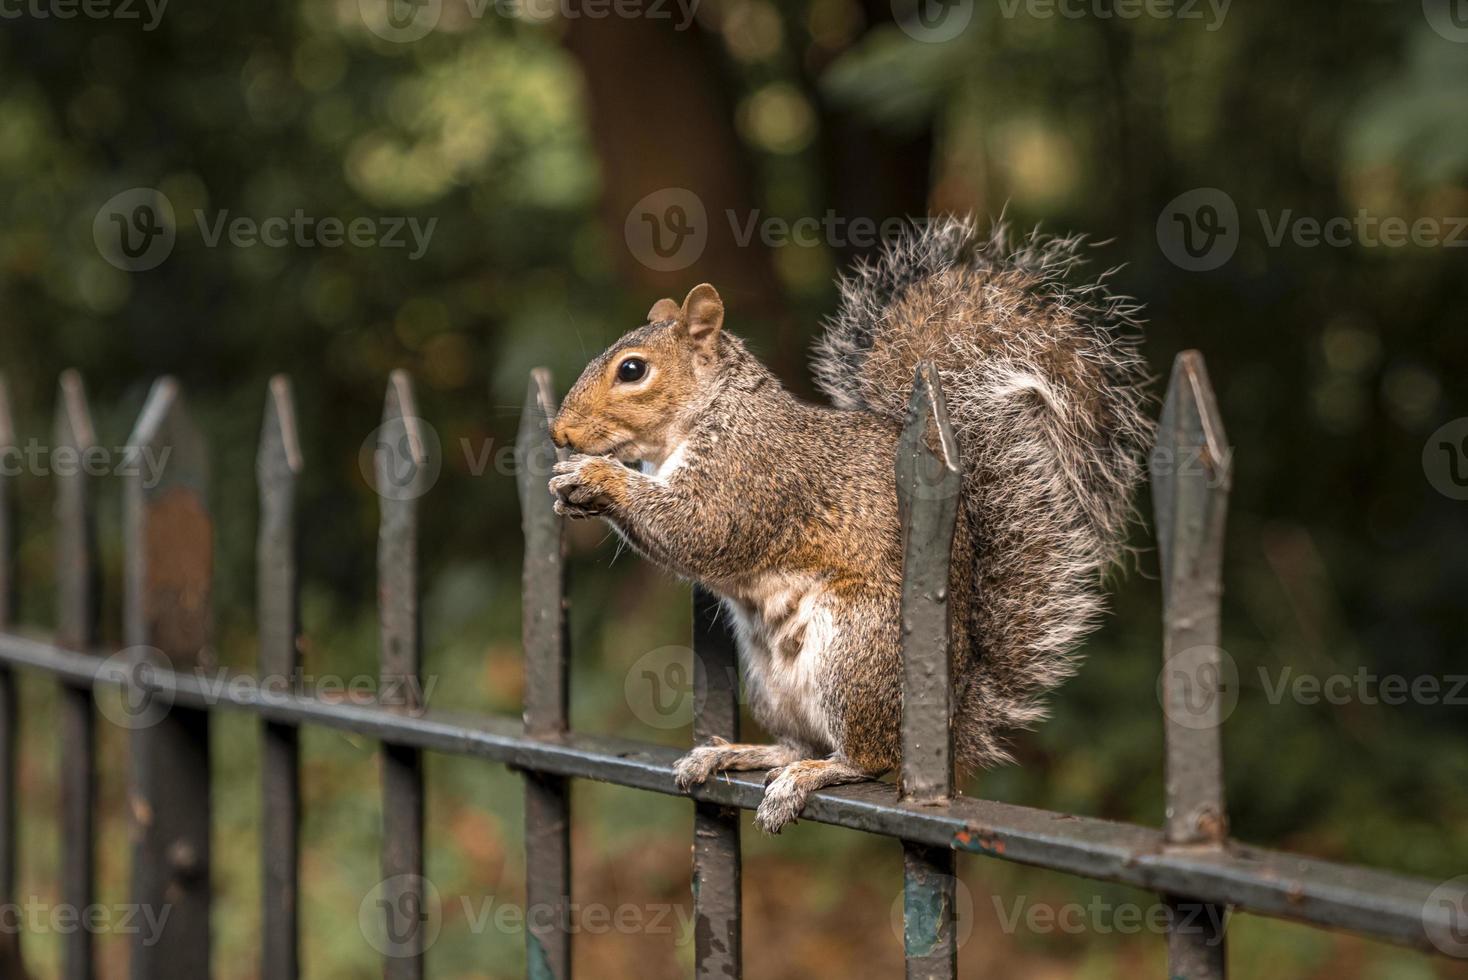 söt liten ekorre gnager mat medan han sitter på spikar staket i parken foto